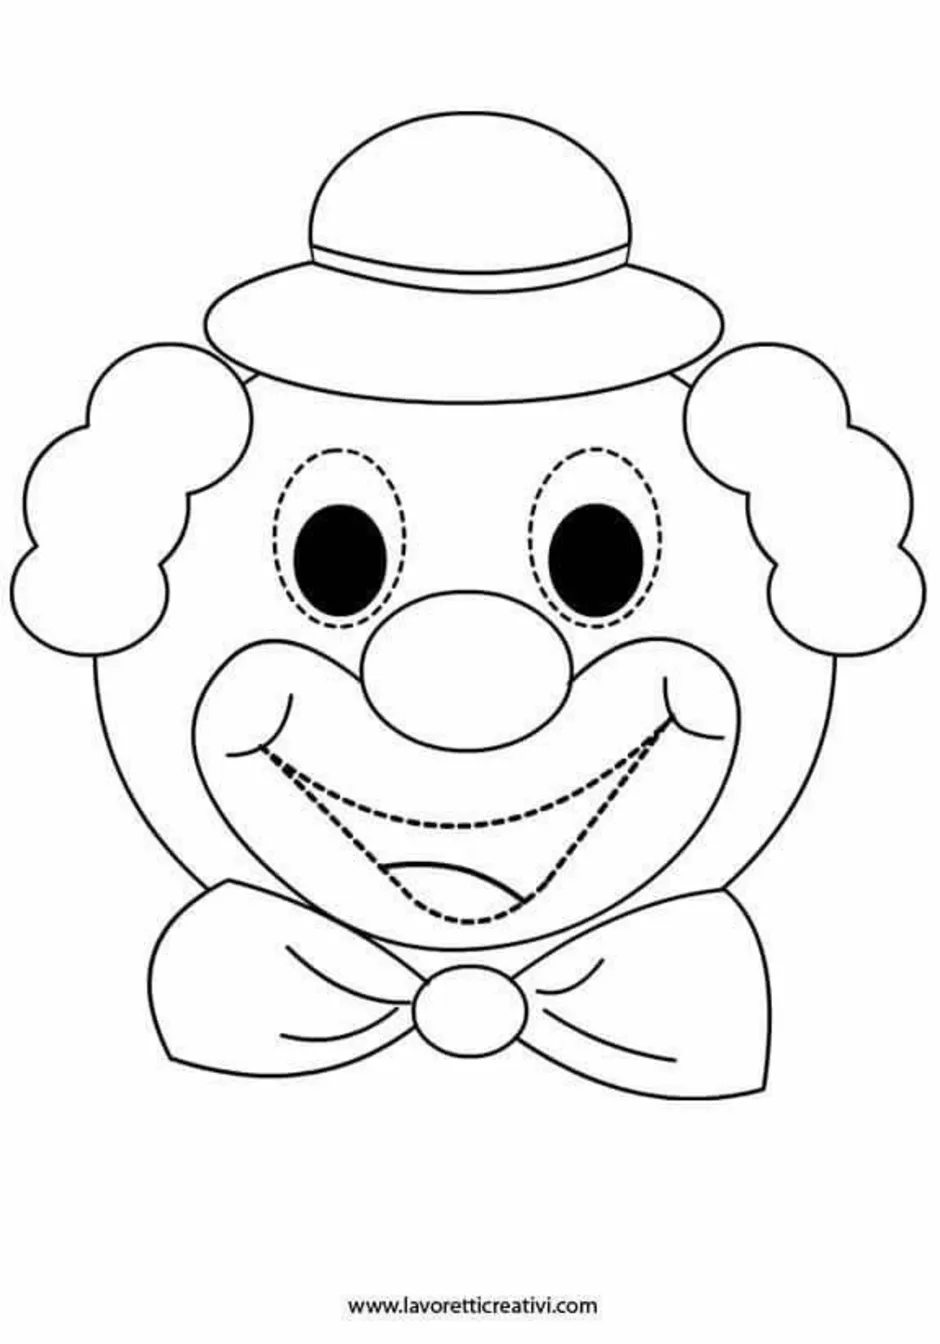 Шаблон клоуна для аппликации для детей. Клоун раскраска. Лицо клоуна раскраска. Клоун раскраска для детей. Клоун трафарет.